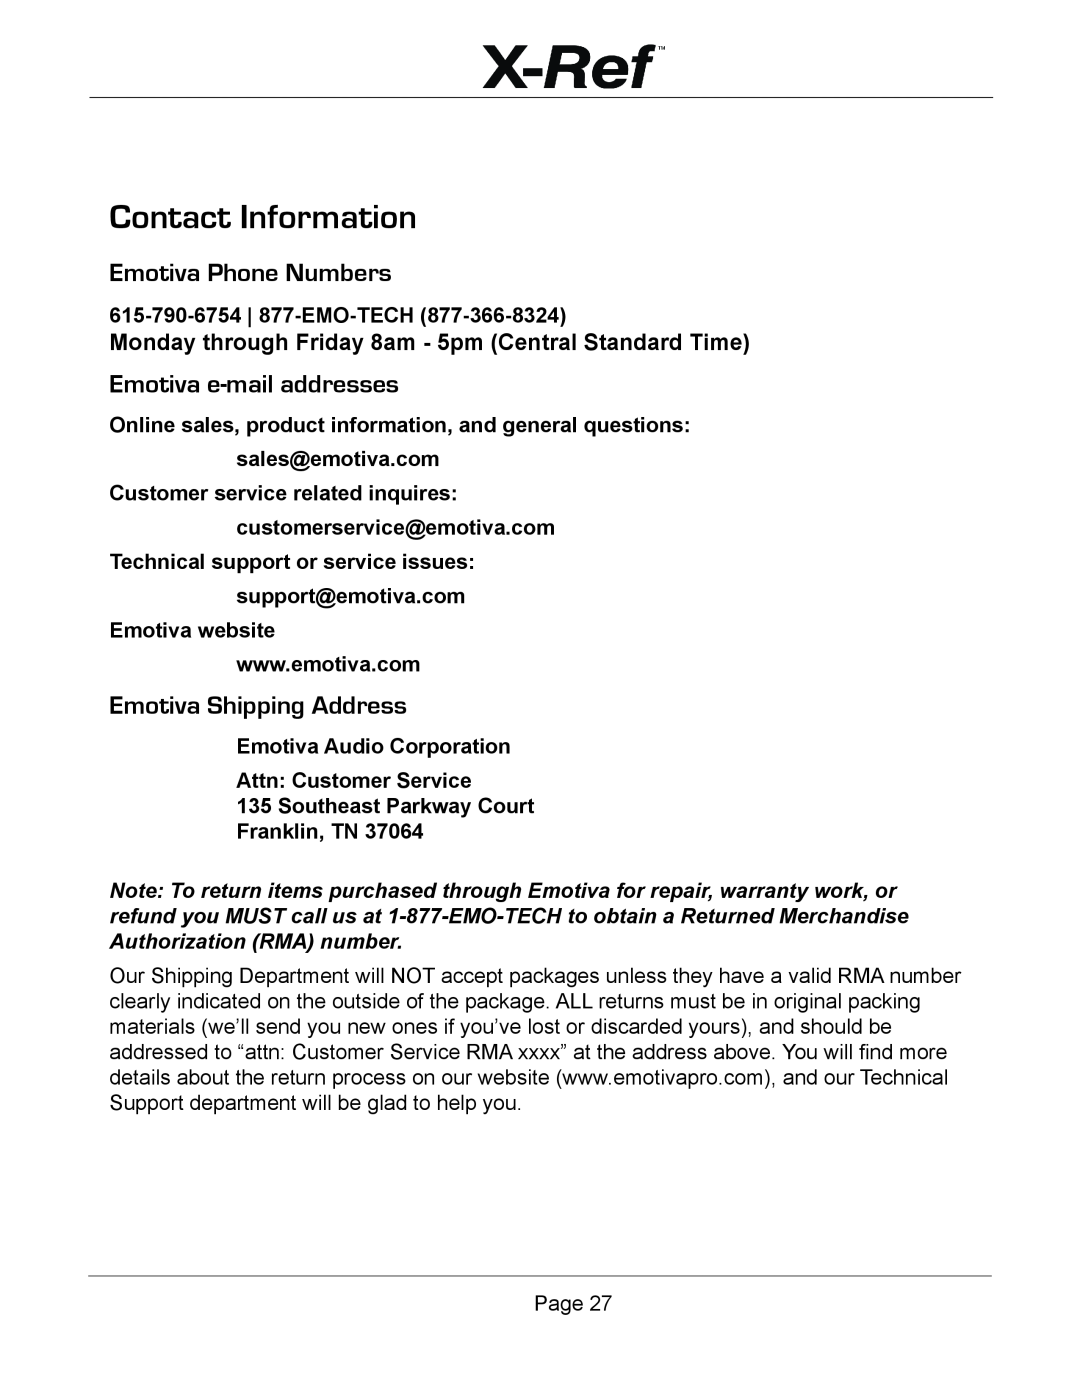 Emotiva X-Ref Contact Information, Emotiva Audio Corporation Attn Customer Service, Southeast Parkway Court Franklin, TN 